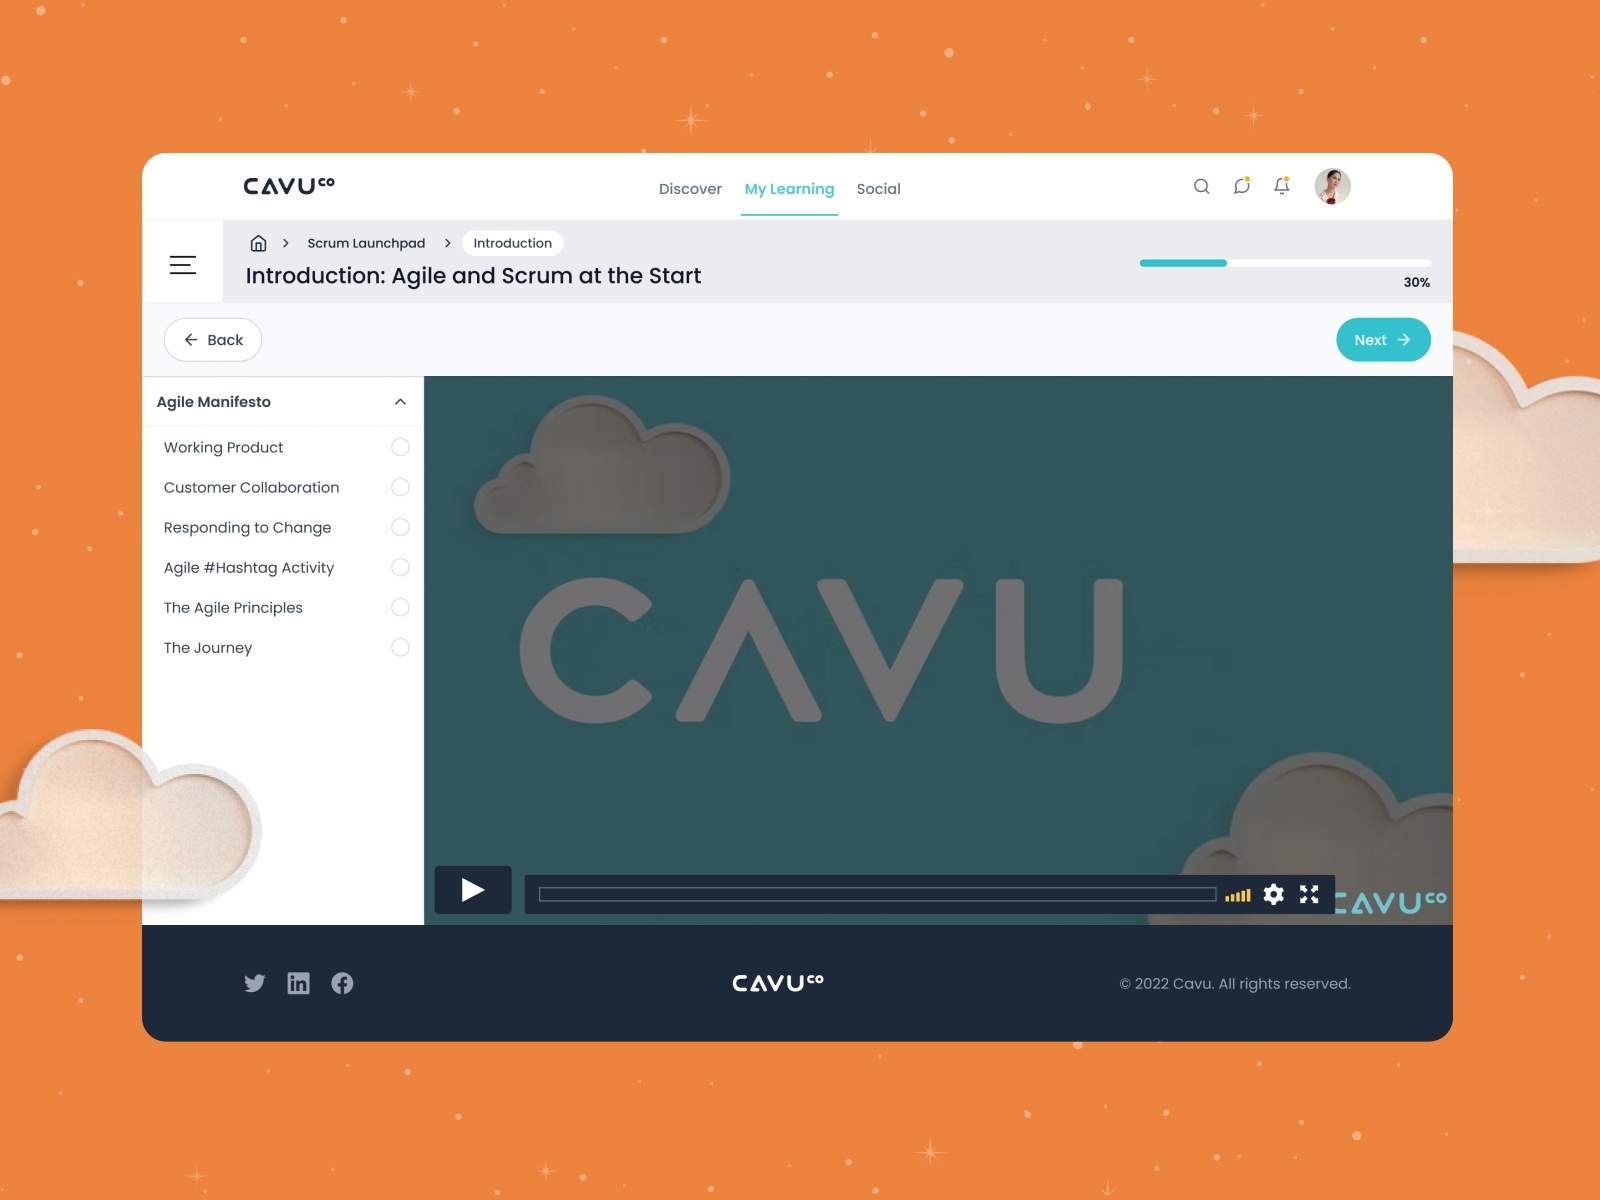 UI mockup of CAVU's learning module